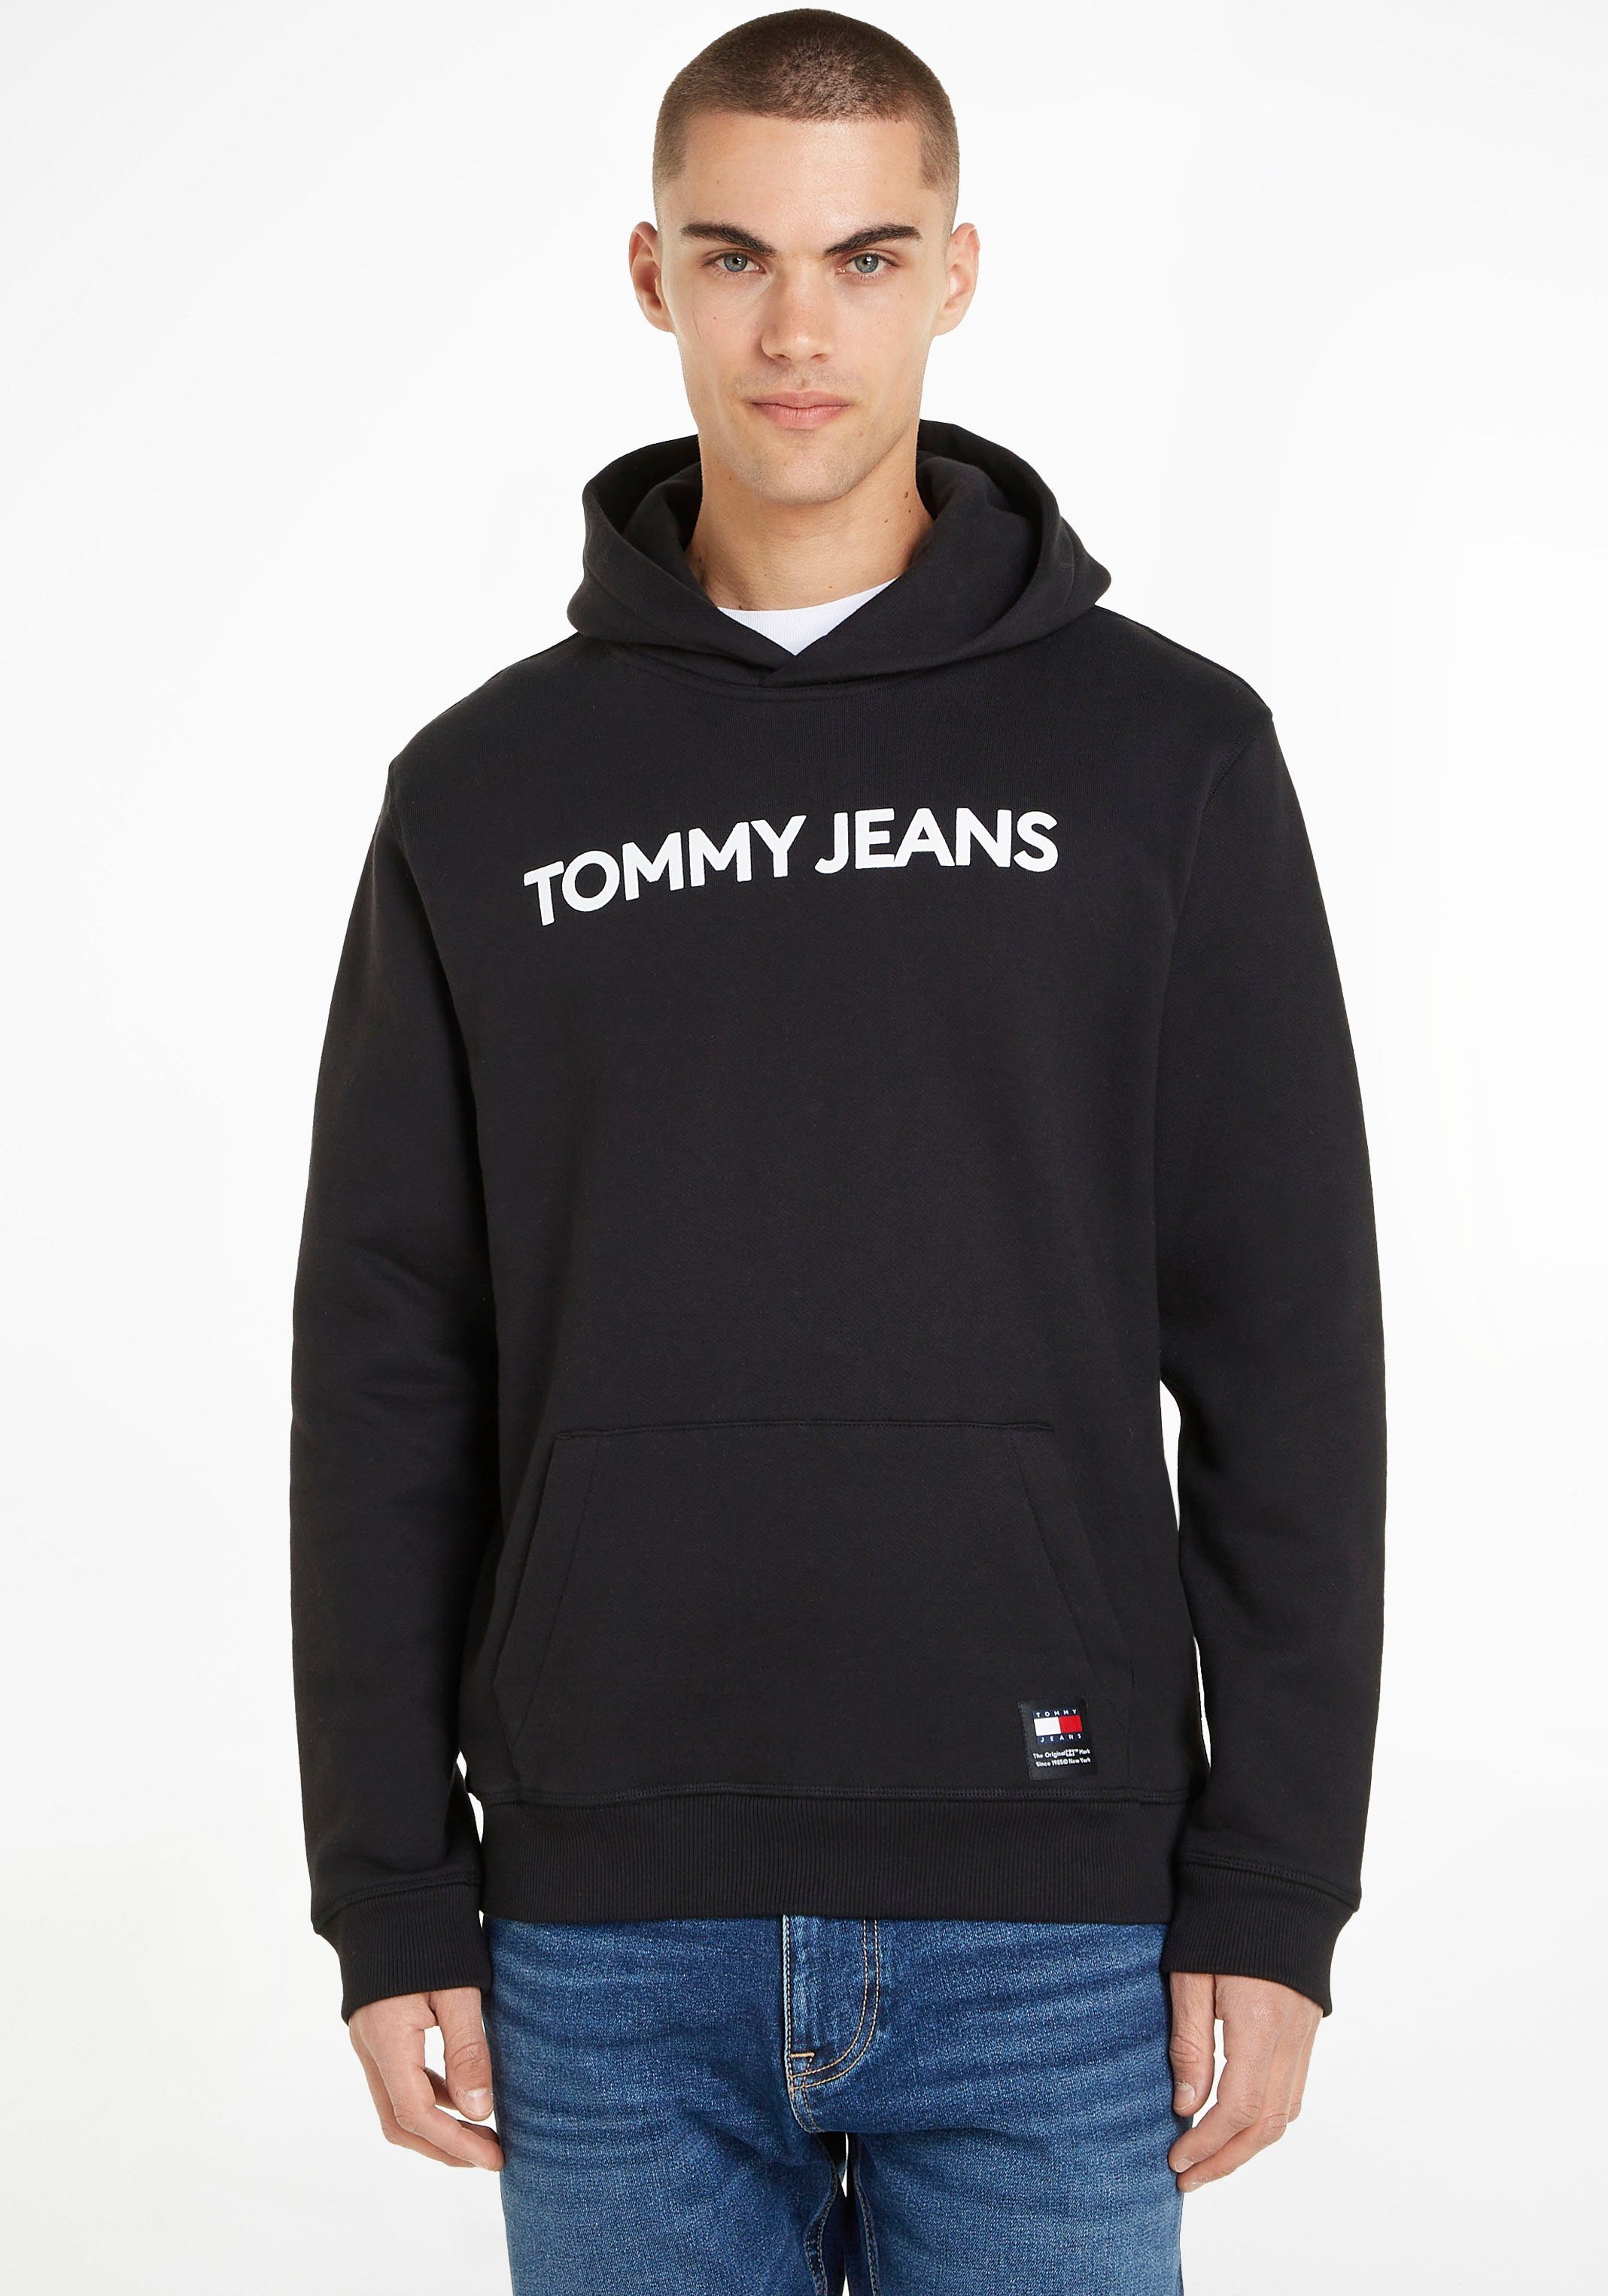 REG Tommy CLASSICS TJM Jeans HOODIE Hoodie Plus EXT BOLD